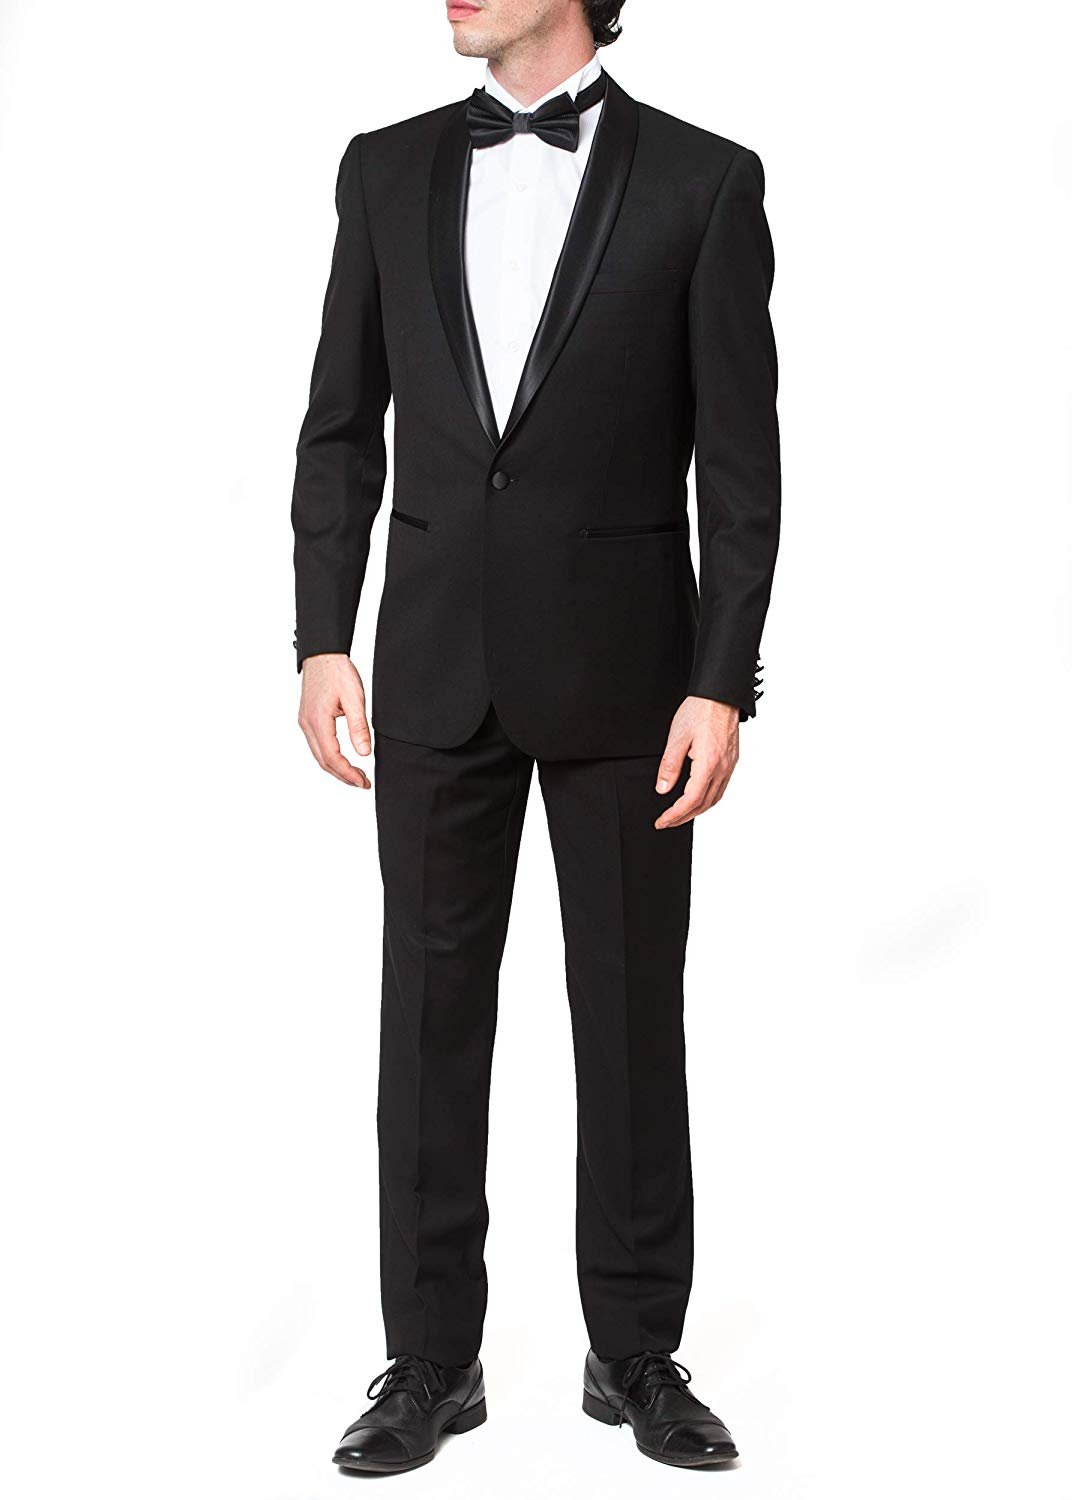 Giorgio Fiorelli Men’s G47815/1 One Button Modern Fit Two-Piece Shawl Collar Tuxedo Suit Set - Black - 44R - image 1 of 5